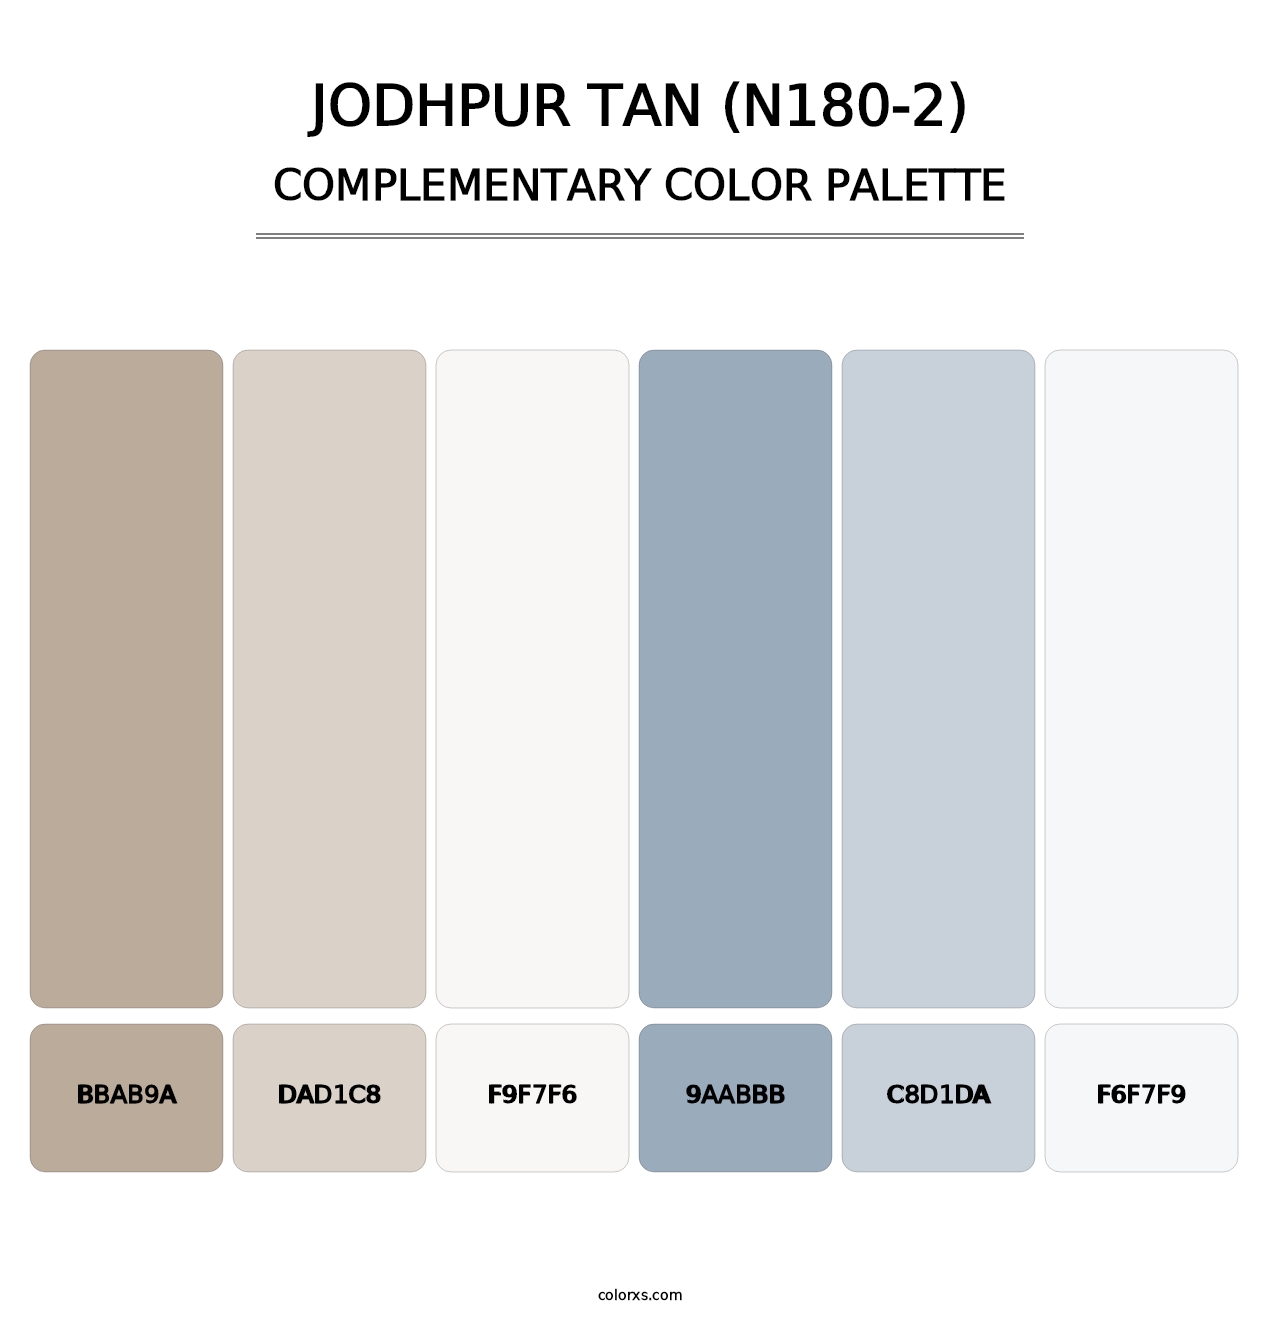 Jodhpur Tan (N180-2) - Complementary Color Palette